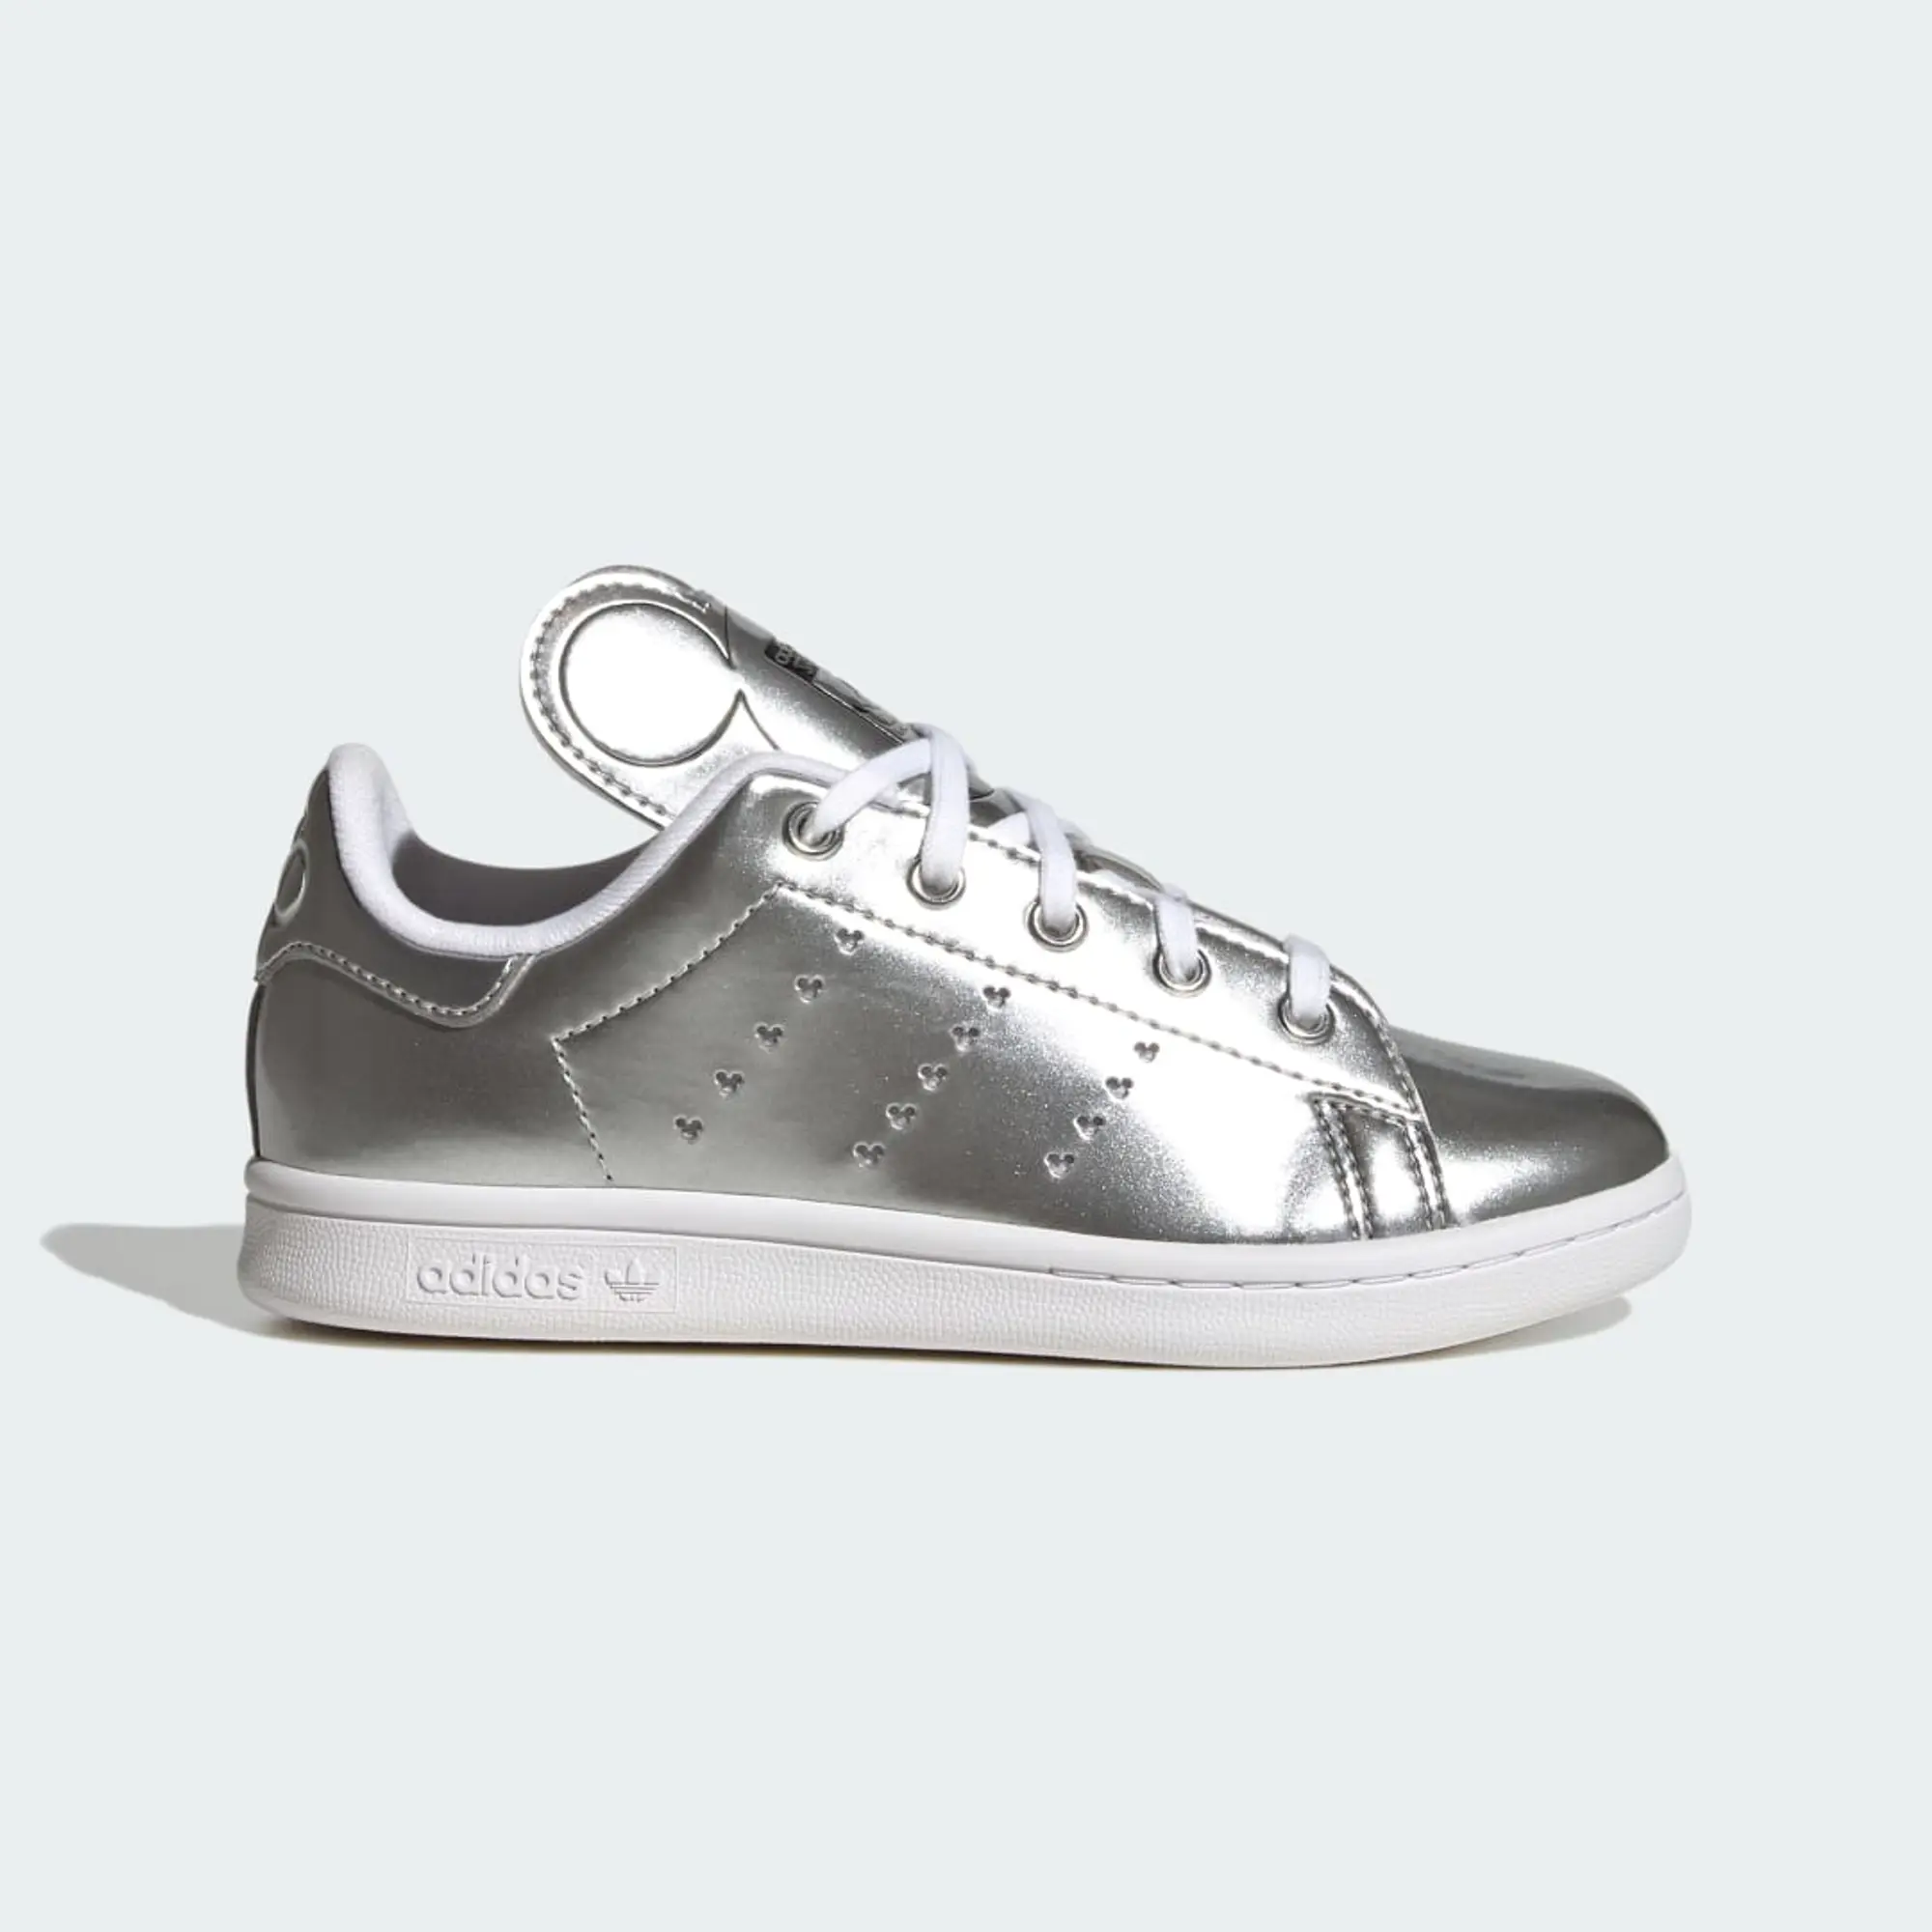 adidas Originals X Disney Kids Stan Smith Trainers - Silver, Silver